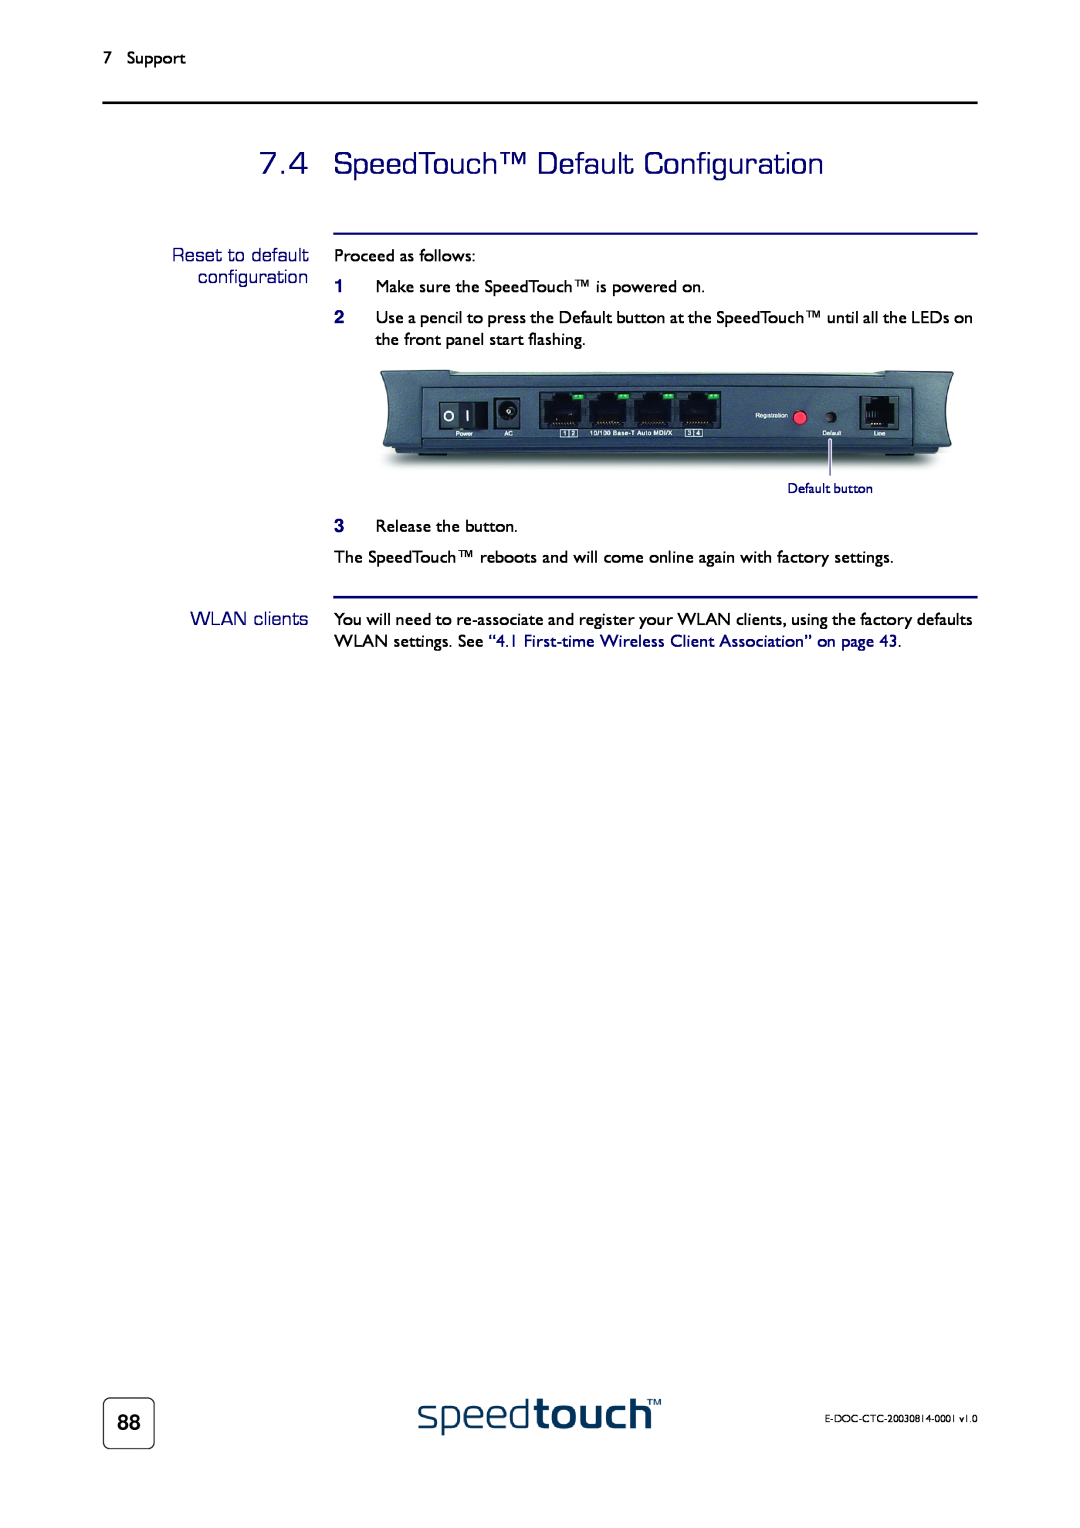 Technicolor - Thomson 545/570 manual SpeedTouch Default Configuration, Reset to default configuration 